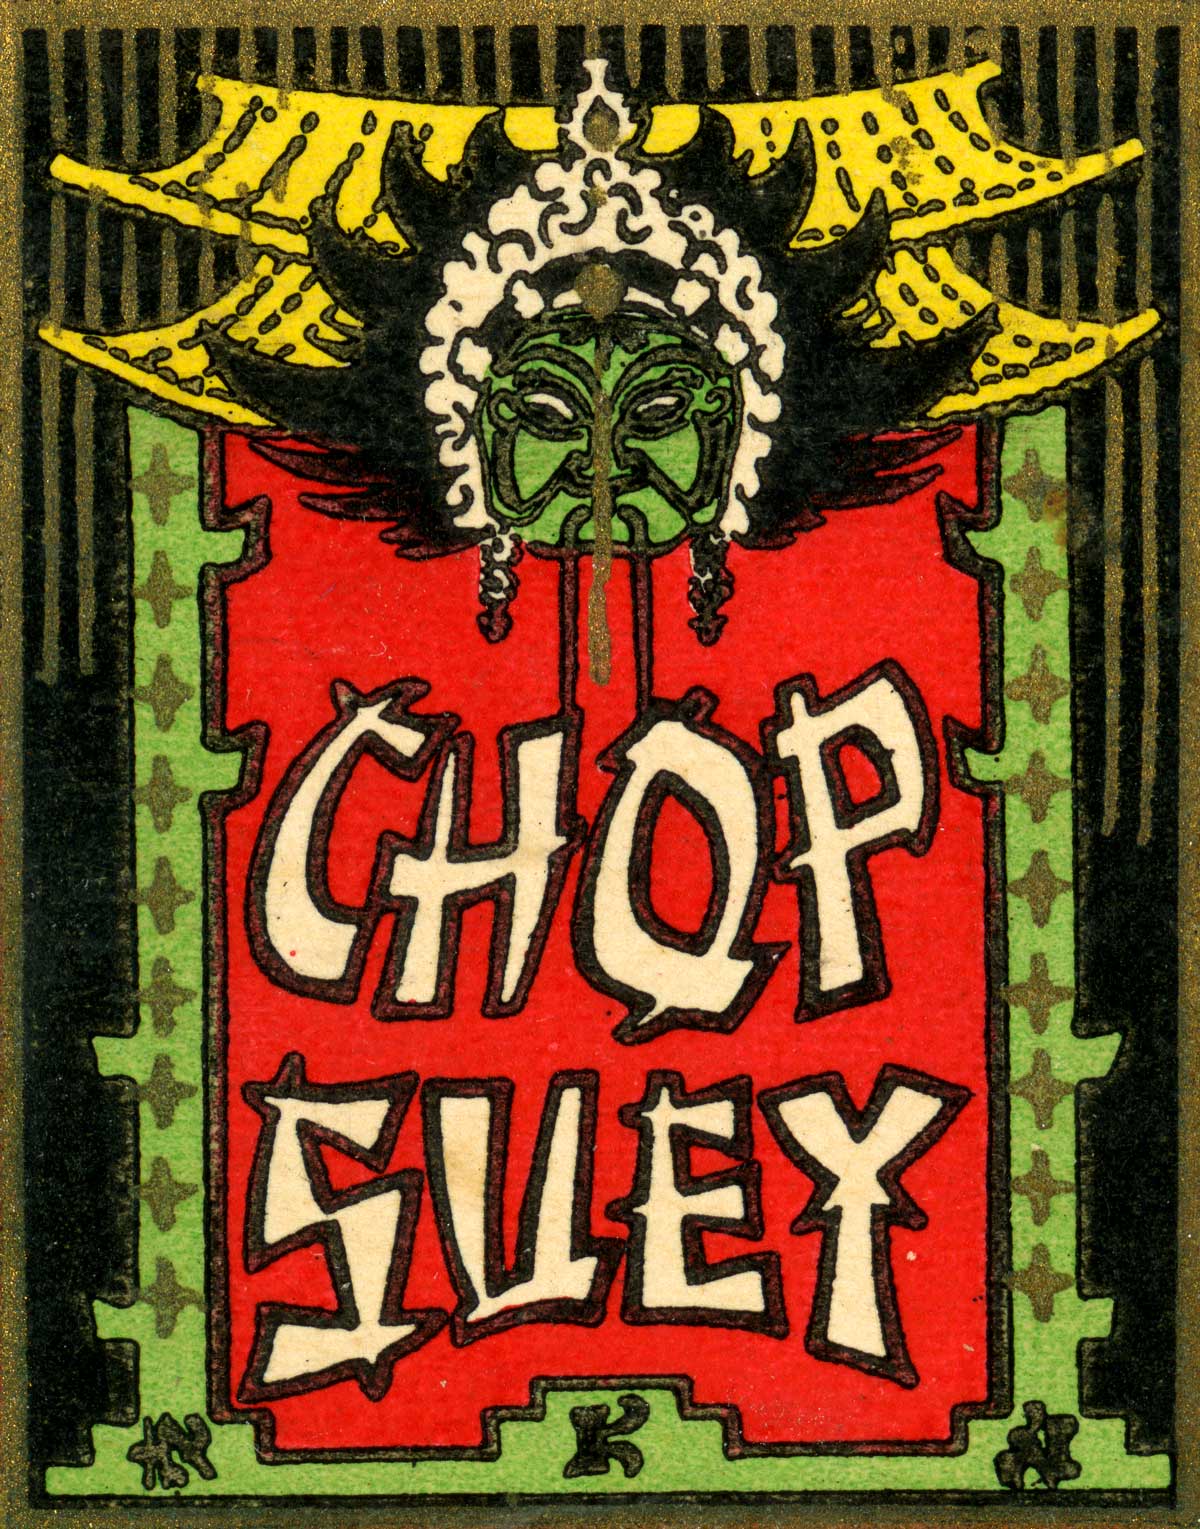 Chop suey matchbox artwork, c.1935. 